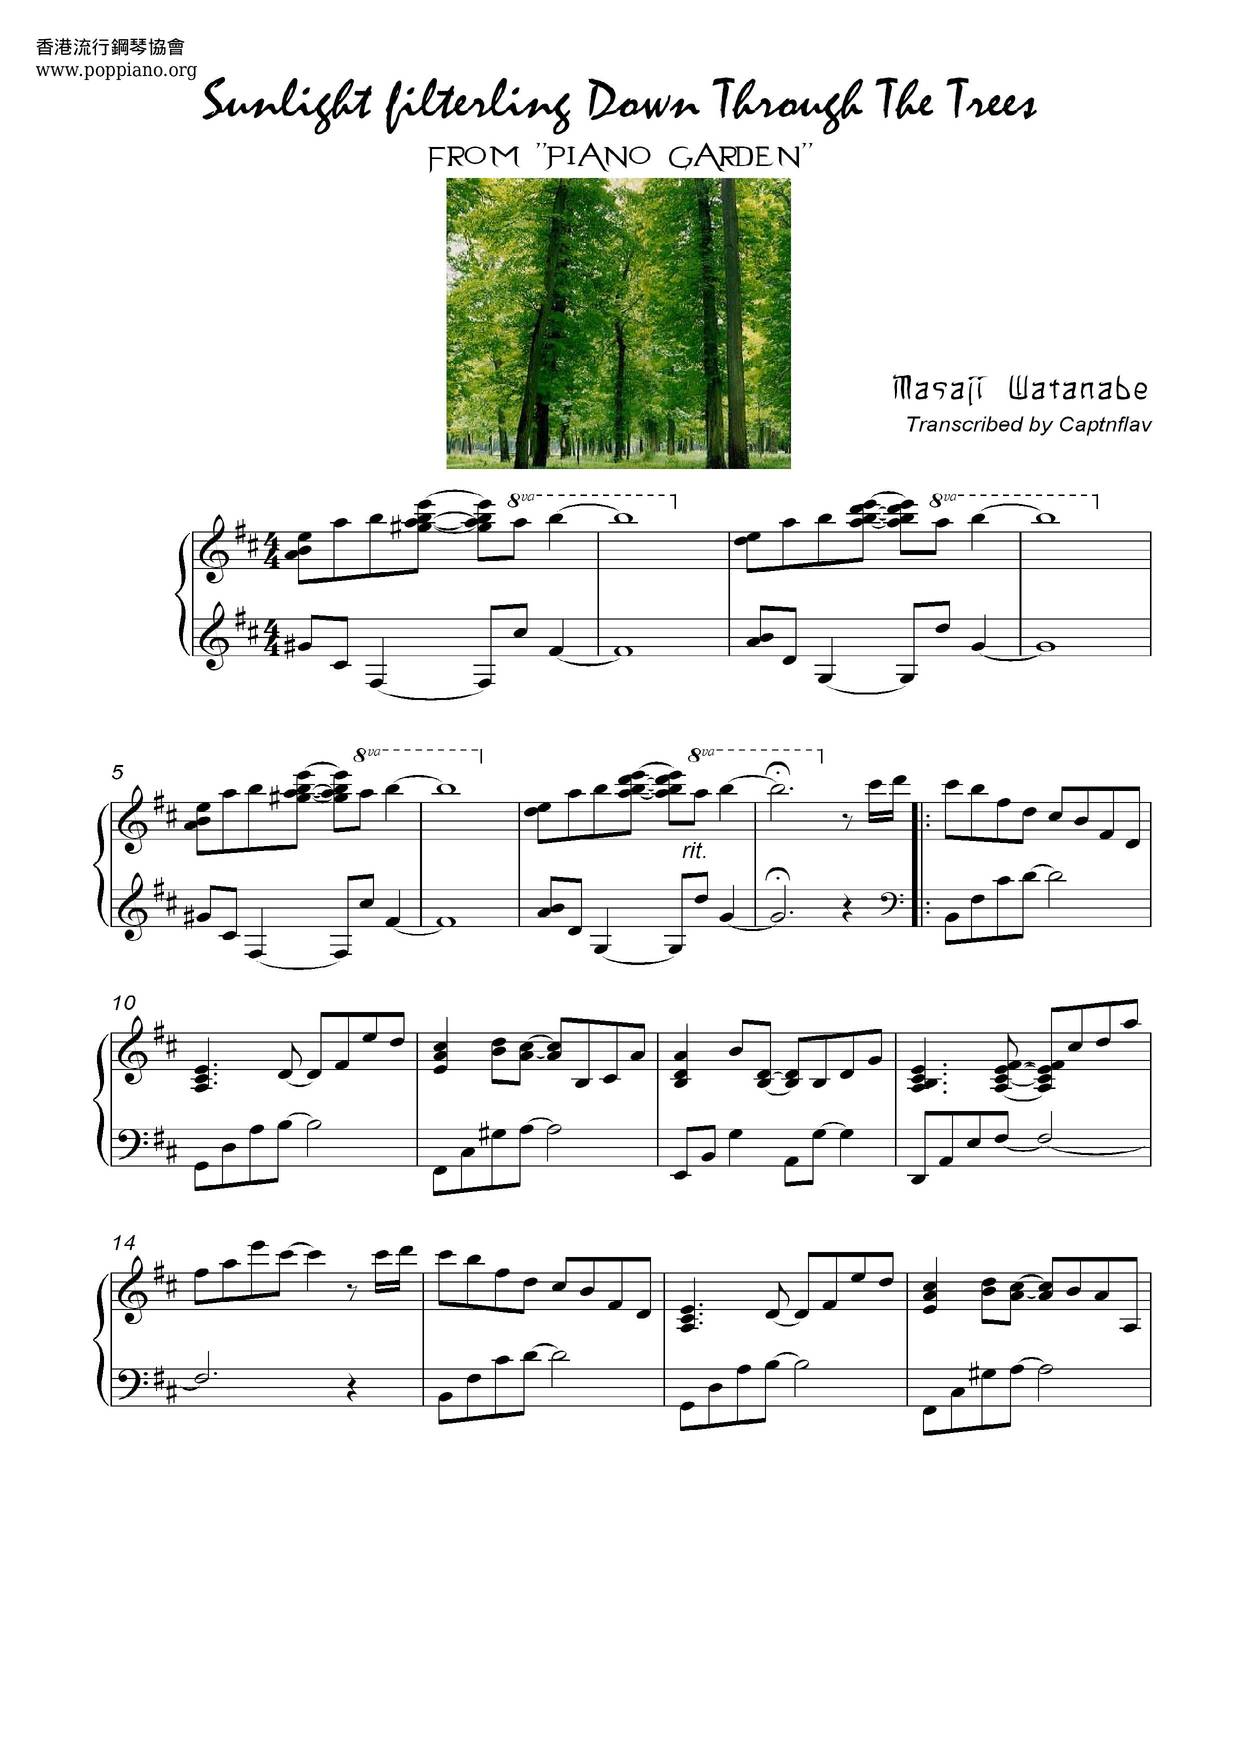 Piano Garden Score